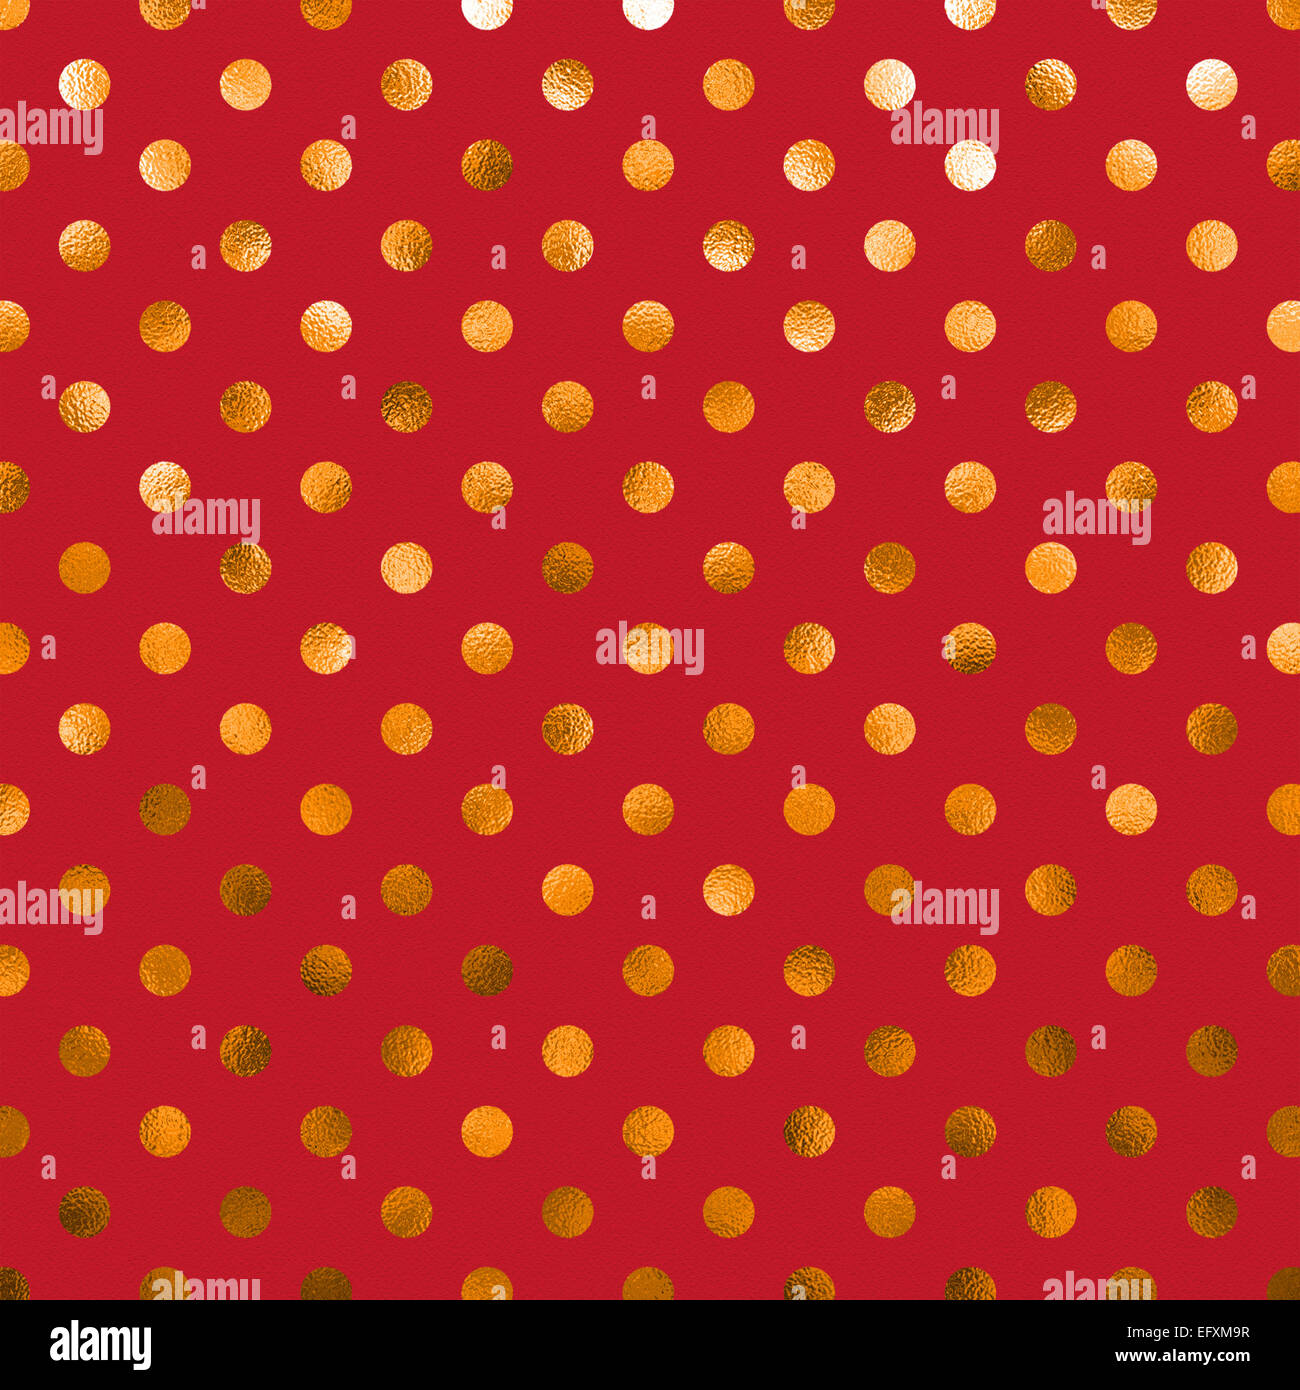 https://c8.alamy.com/comp/EFXM9R/red-orange-yellow-metallic-foil-polka-dot-pattern-swiss-dots-texture-EFXM9R.jpg